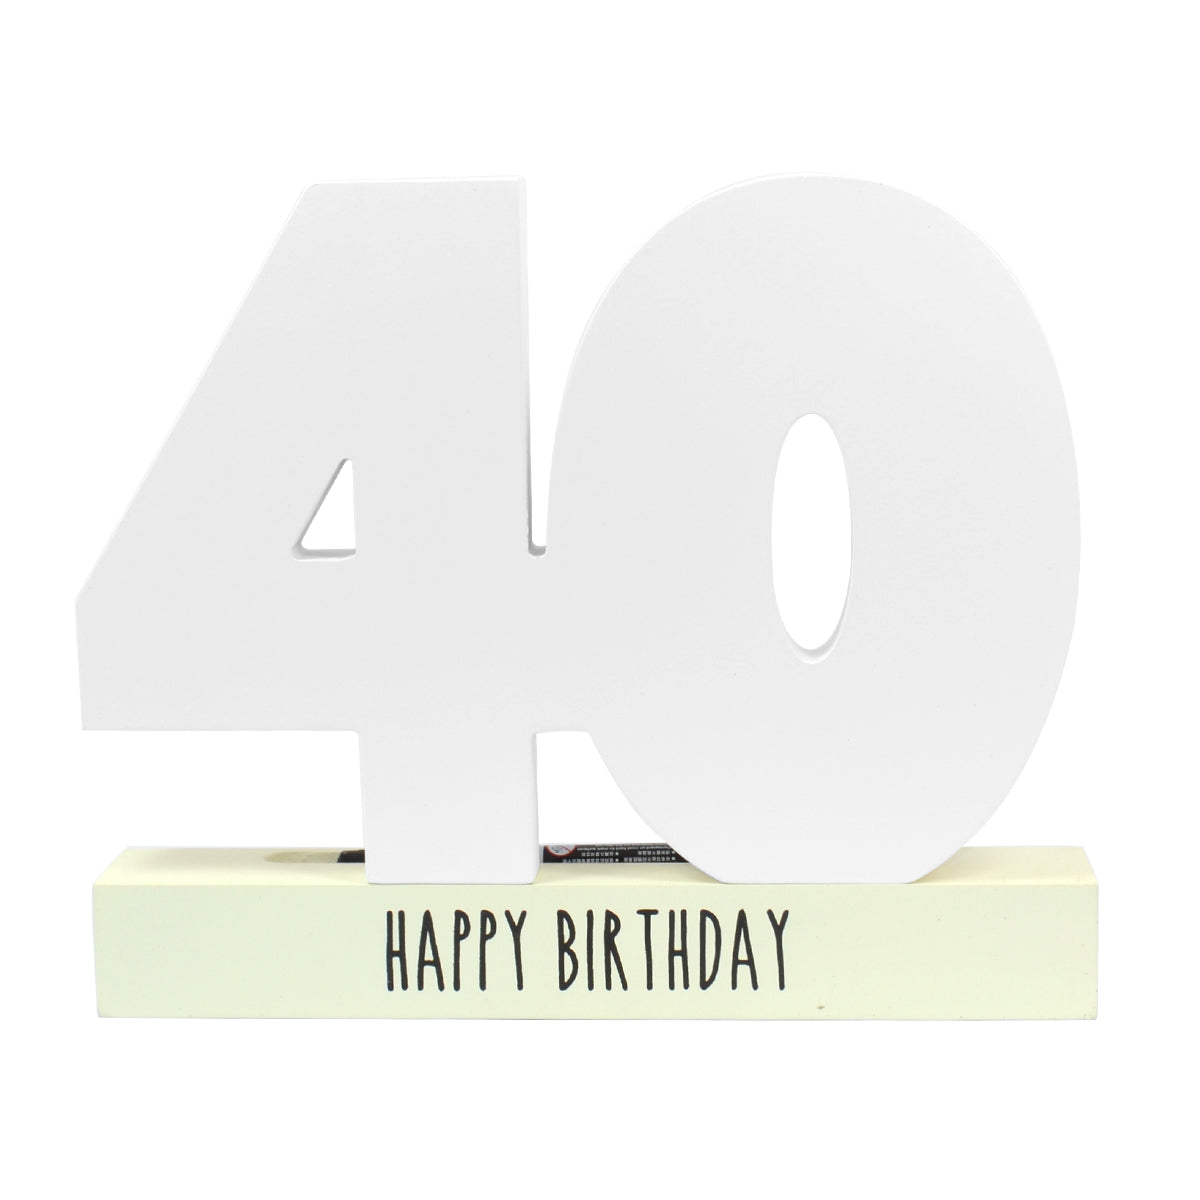 Age 40 Signature Block 40th Birthday Pen Included